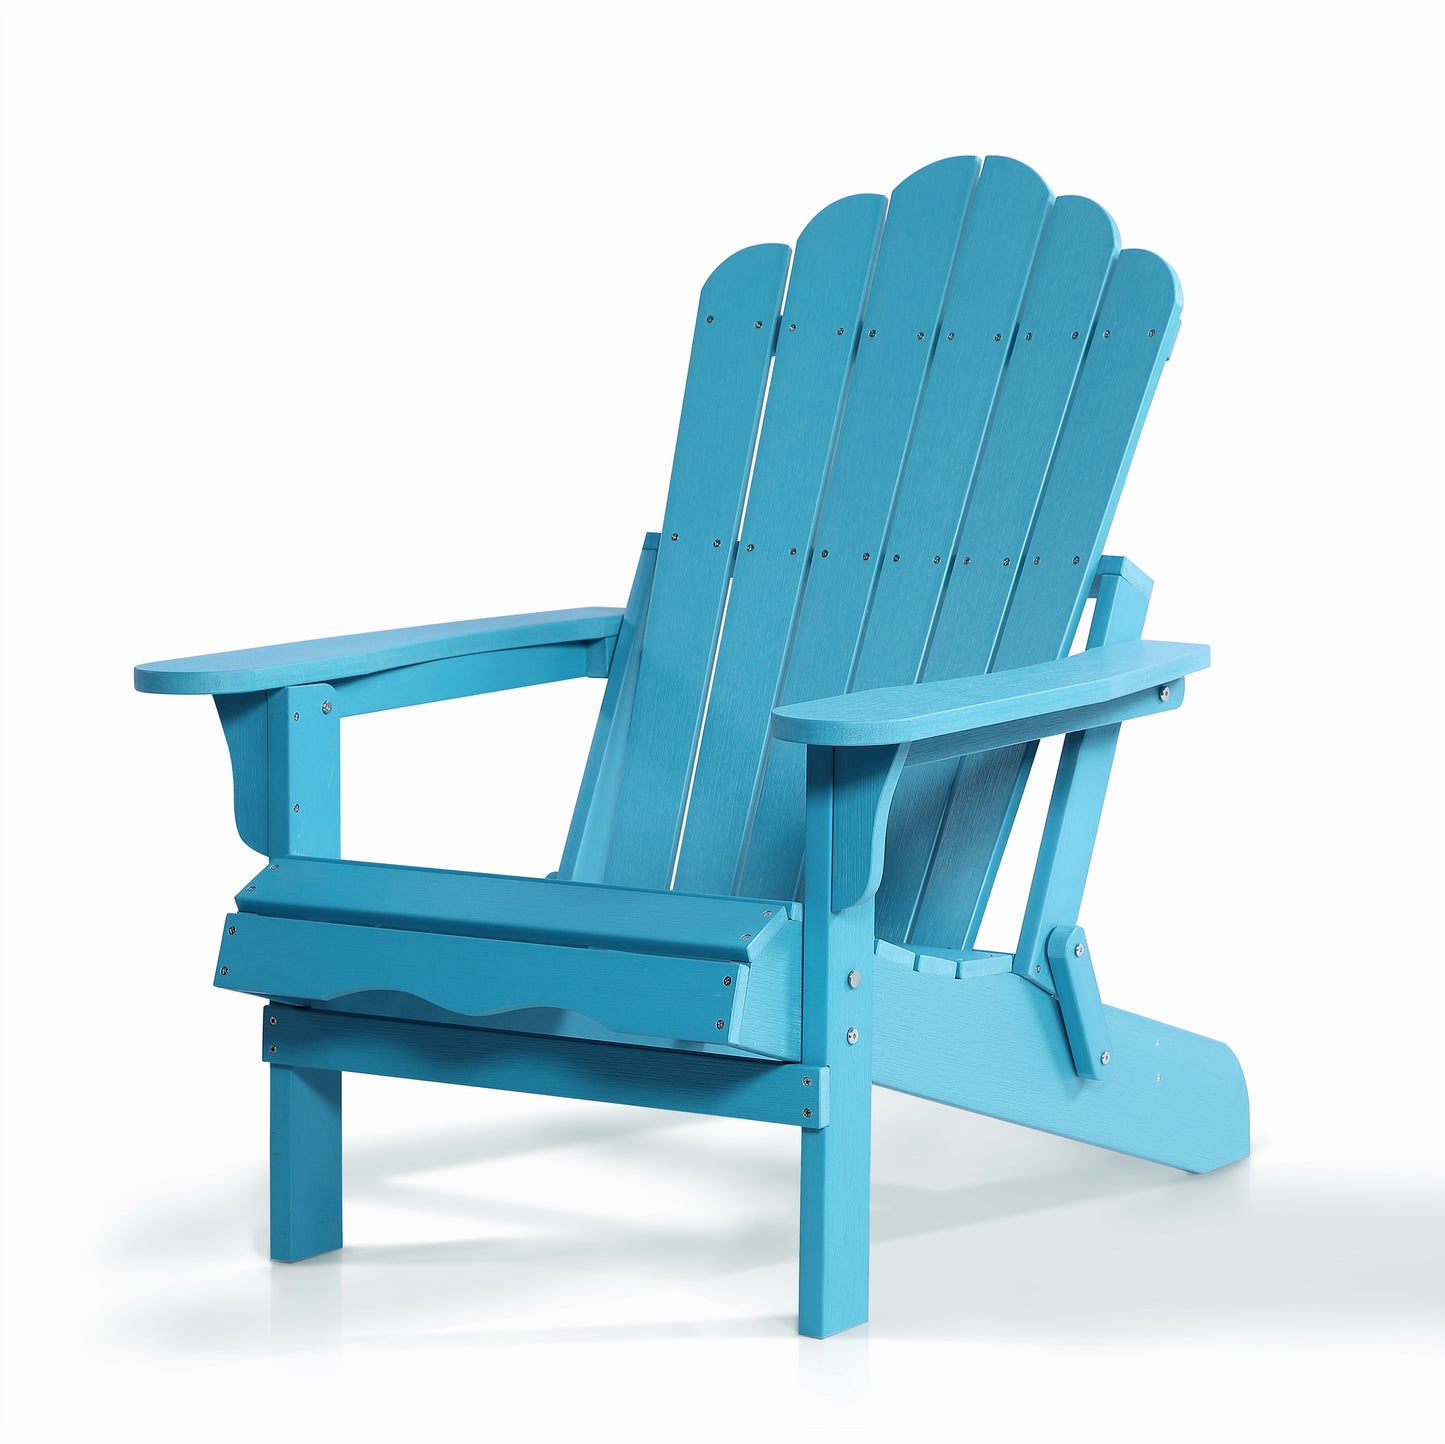 Henninger Plastic Folding Adirondack Chair Dark Brown Oak